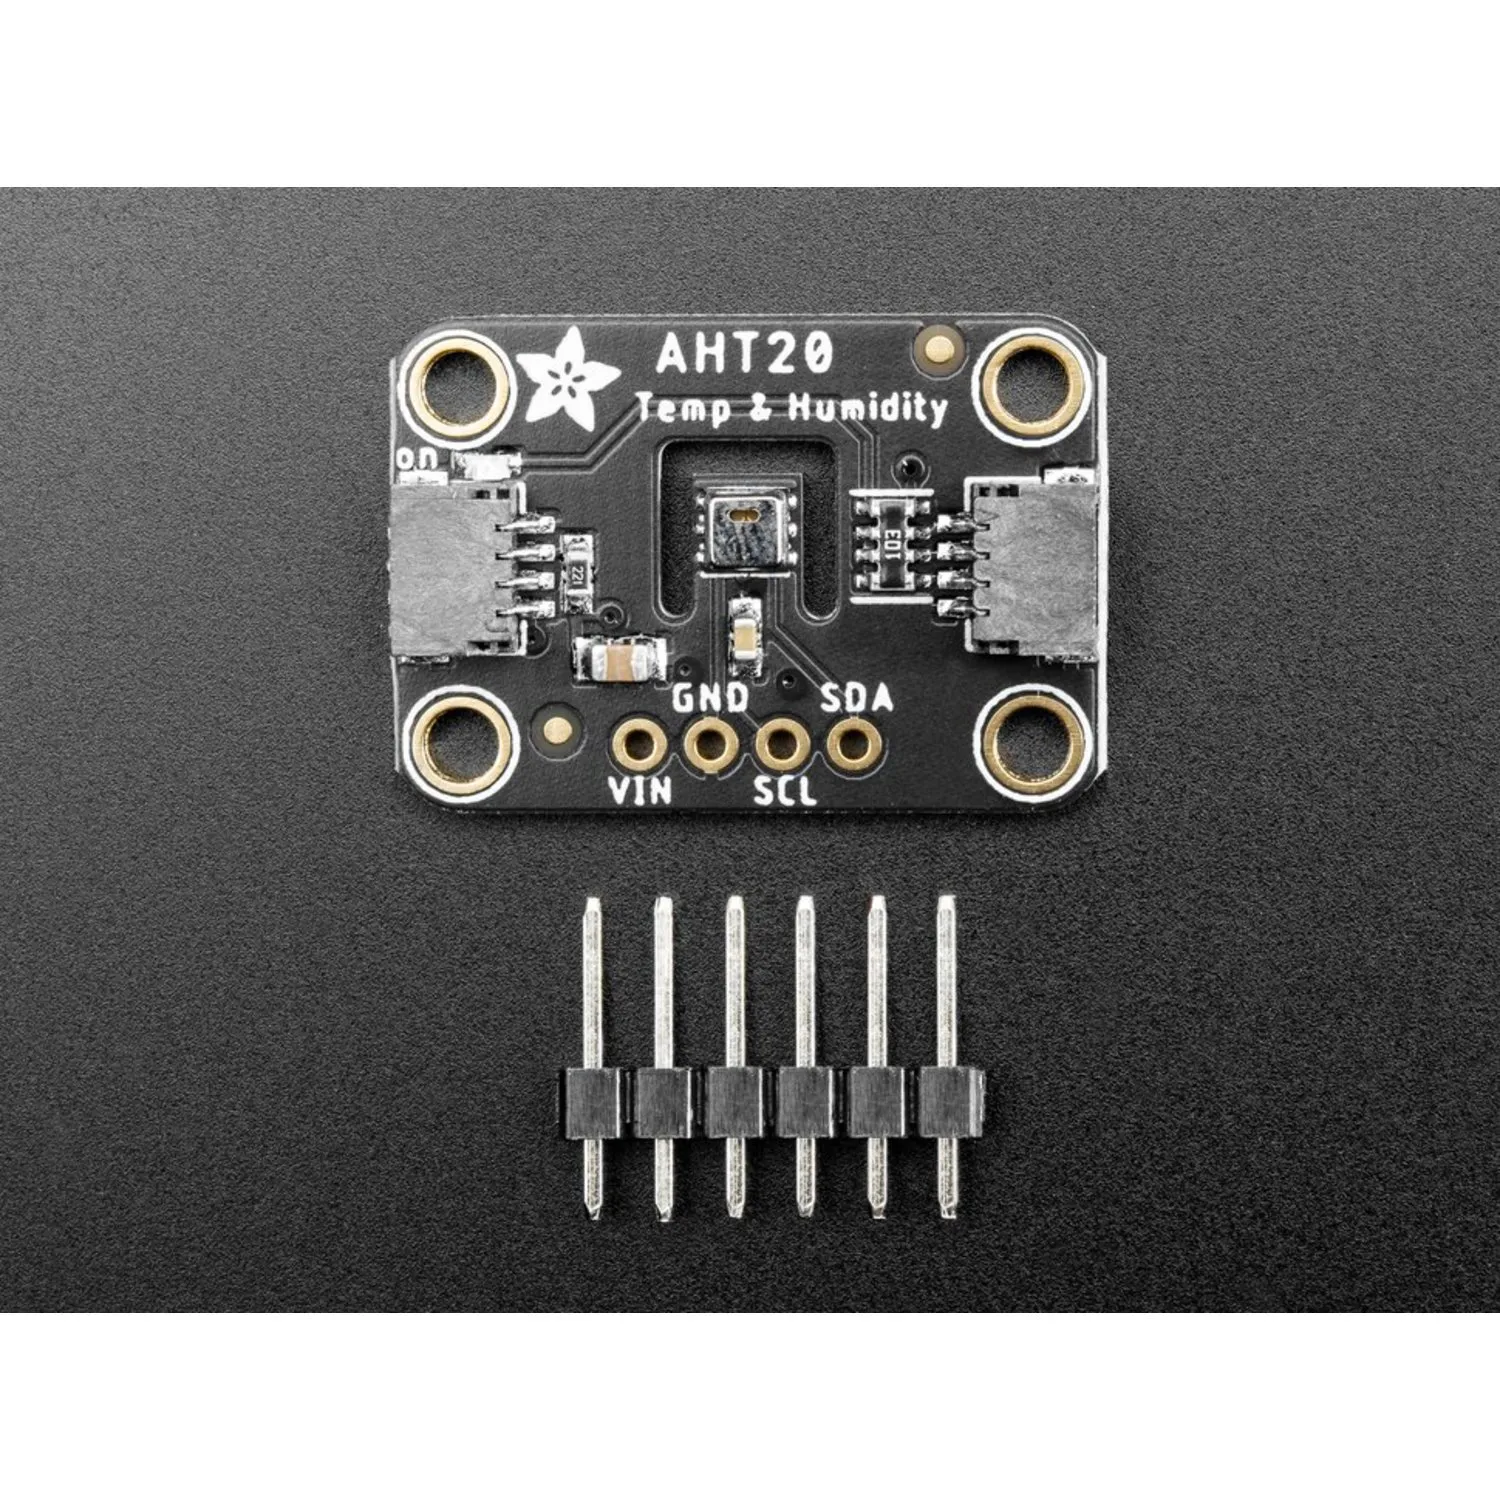 Photo of Adafruit AHT20 - Temperature  Humidity Sensor Breakout Board - STEMMA QT / Qwiic